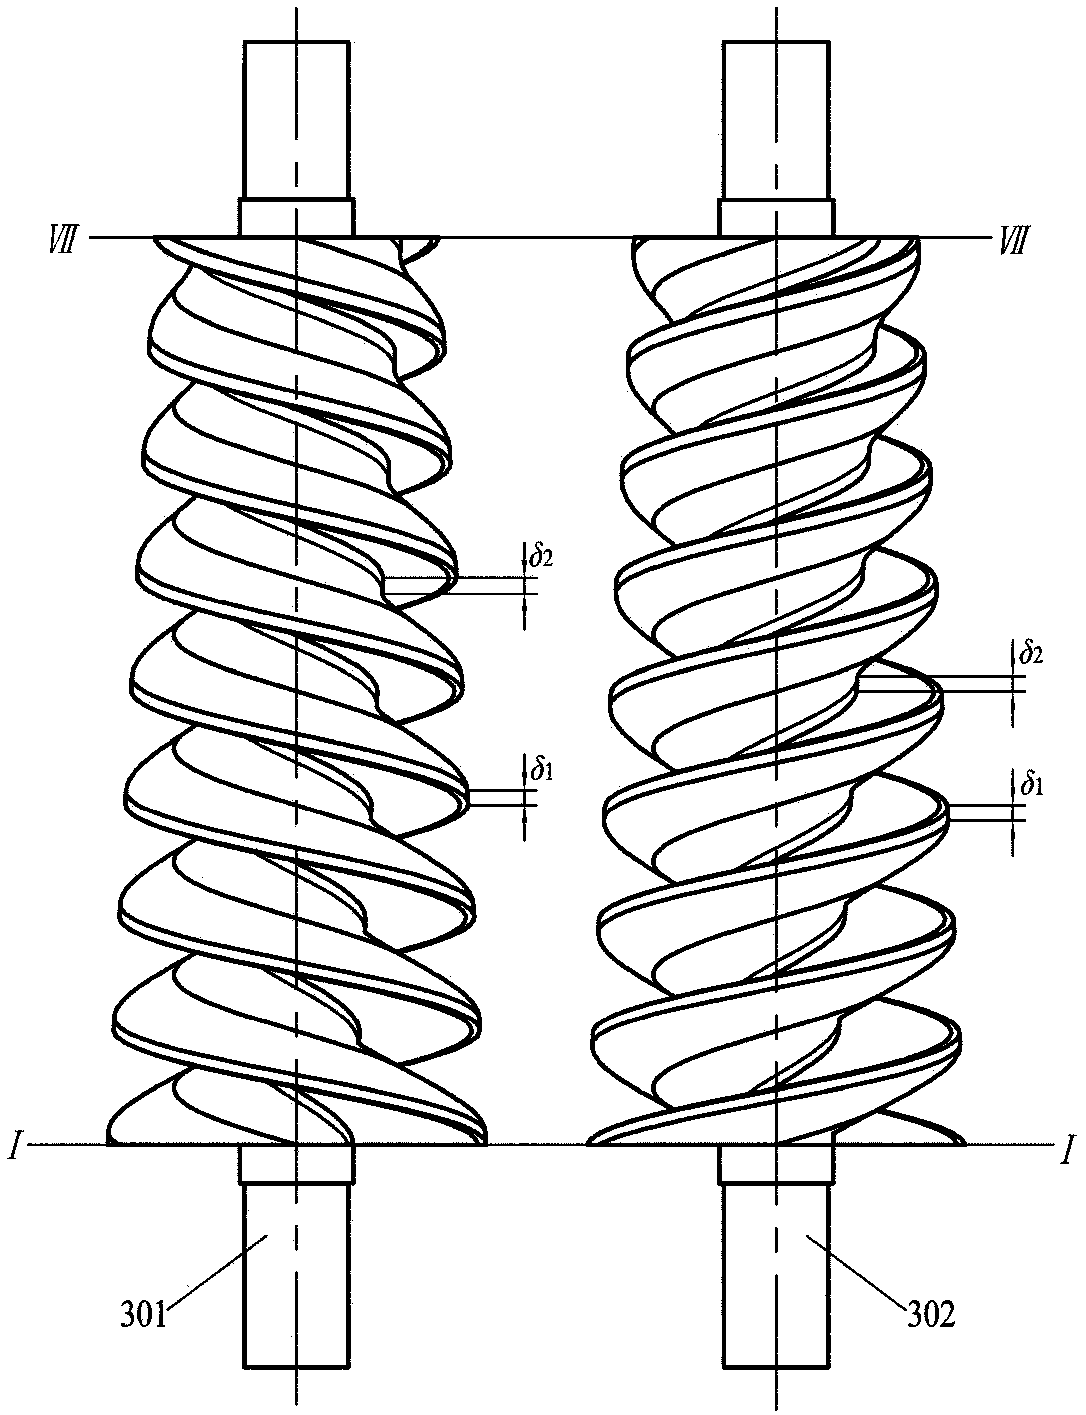 A self-balancing conical screw rotor